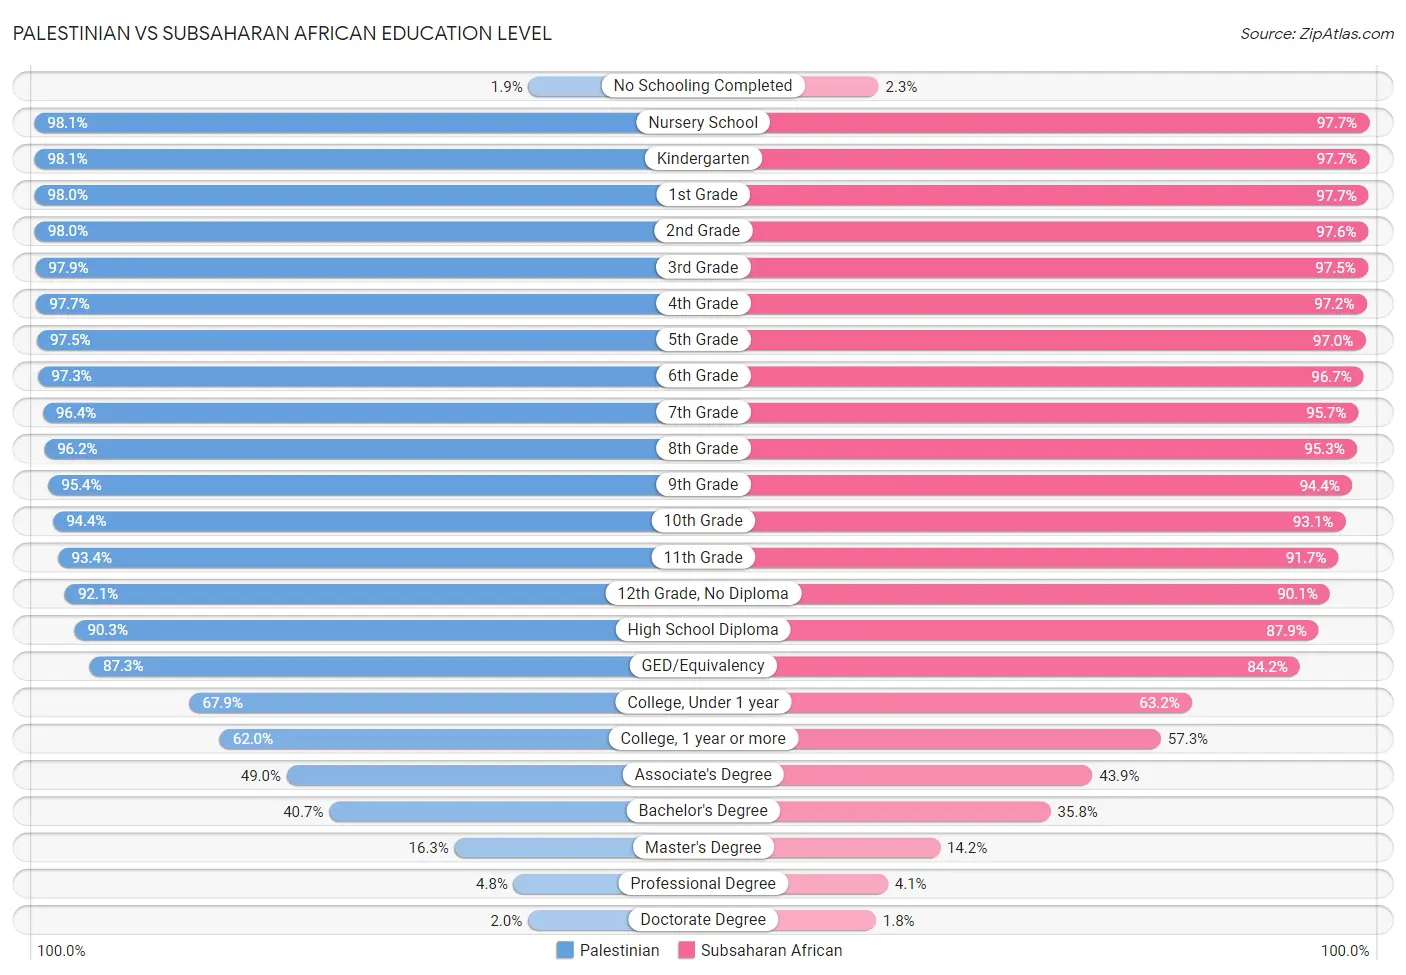 Palestinian vs Subsaharan African Education Level